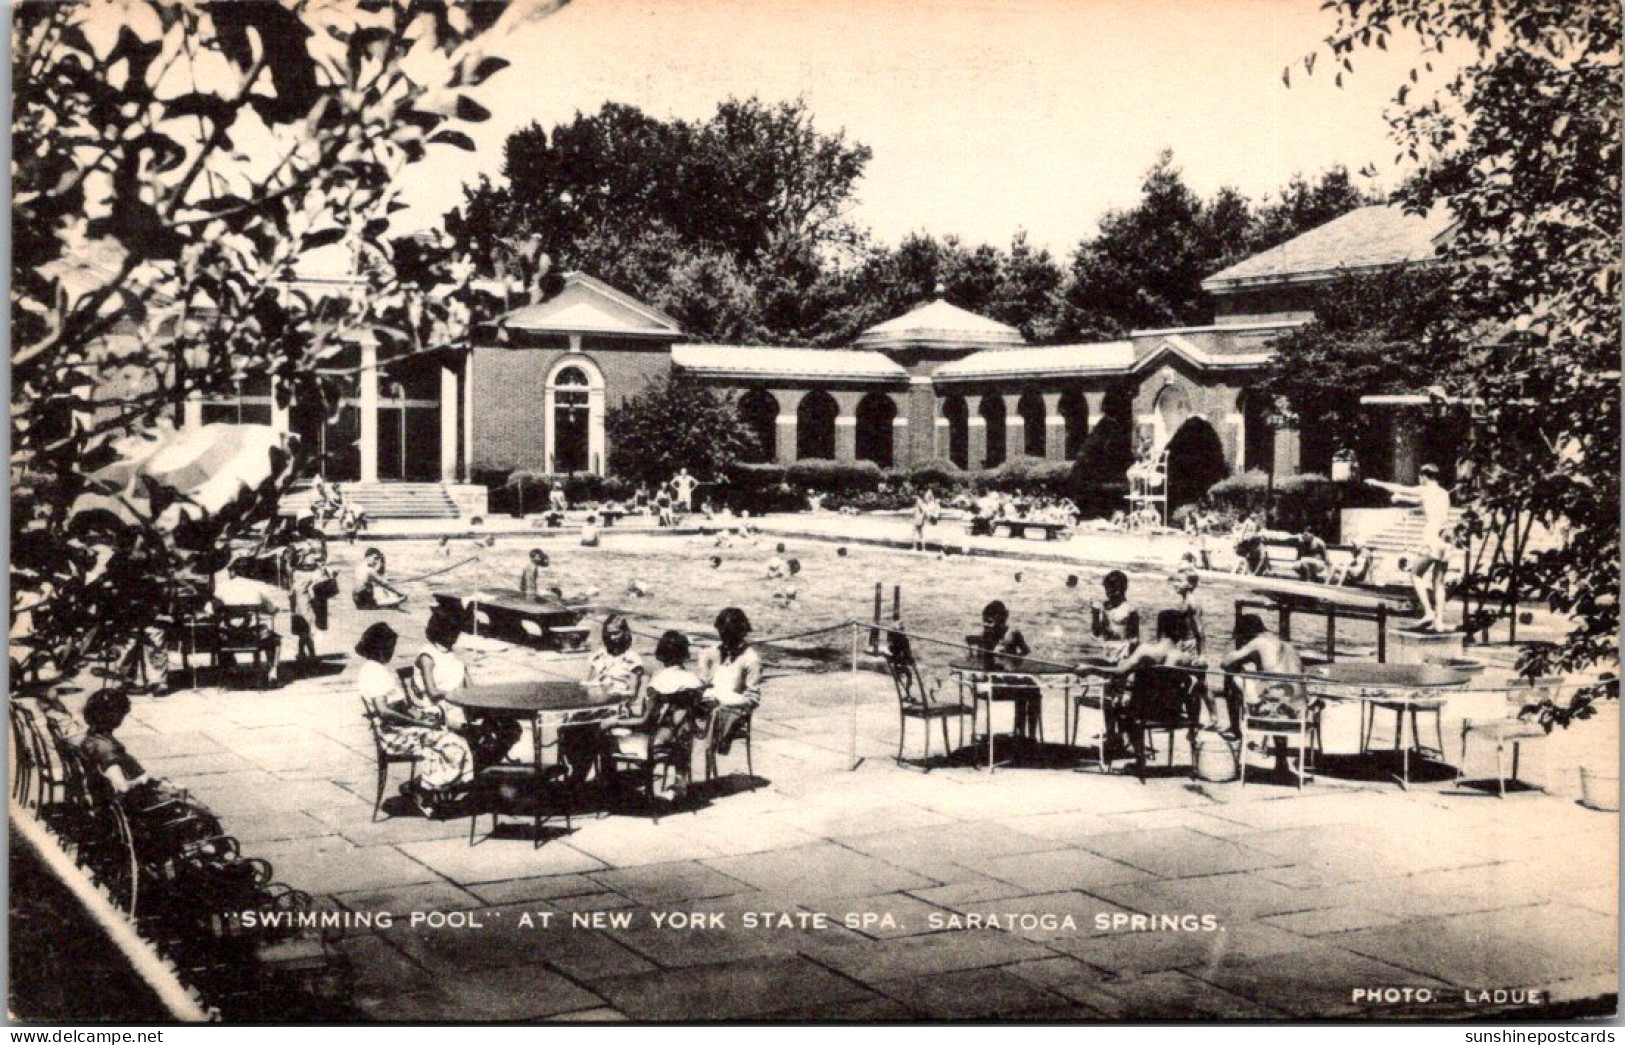 New York Saratoga Springs Swimming Pool At New York State Spa - Saratoga Springs